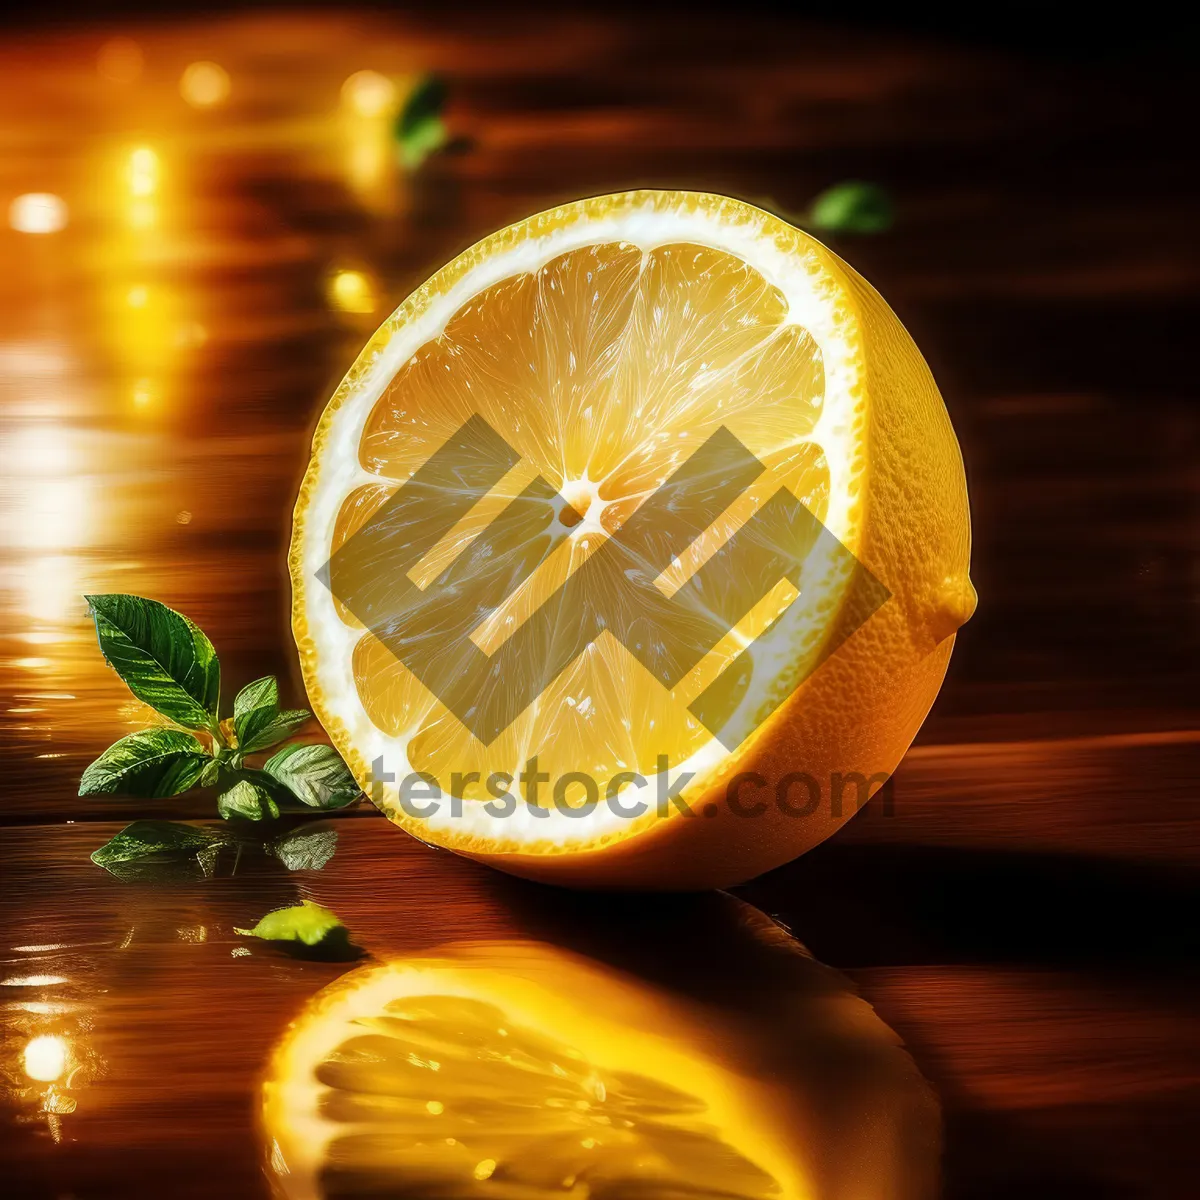 Picture of Fresh Citrus Fruit Variety - Oranges, Lemons, Limes